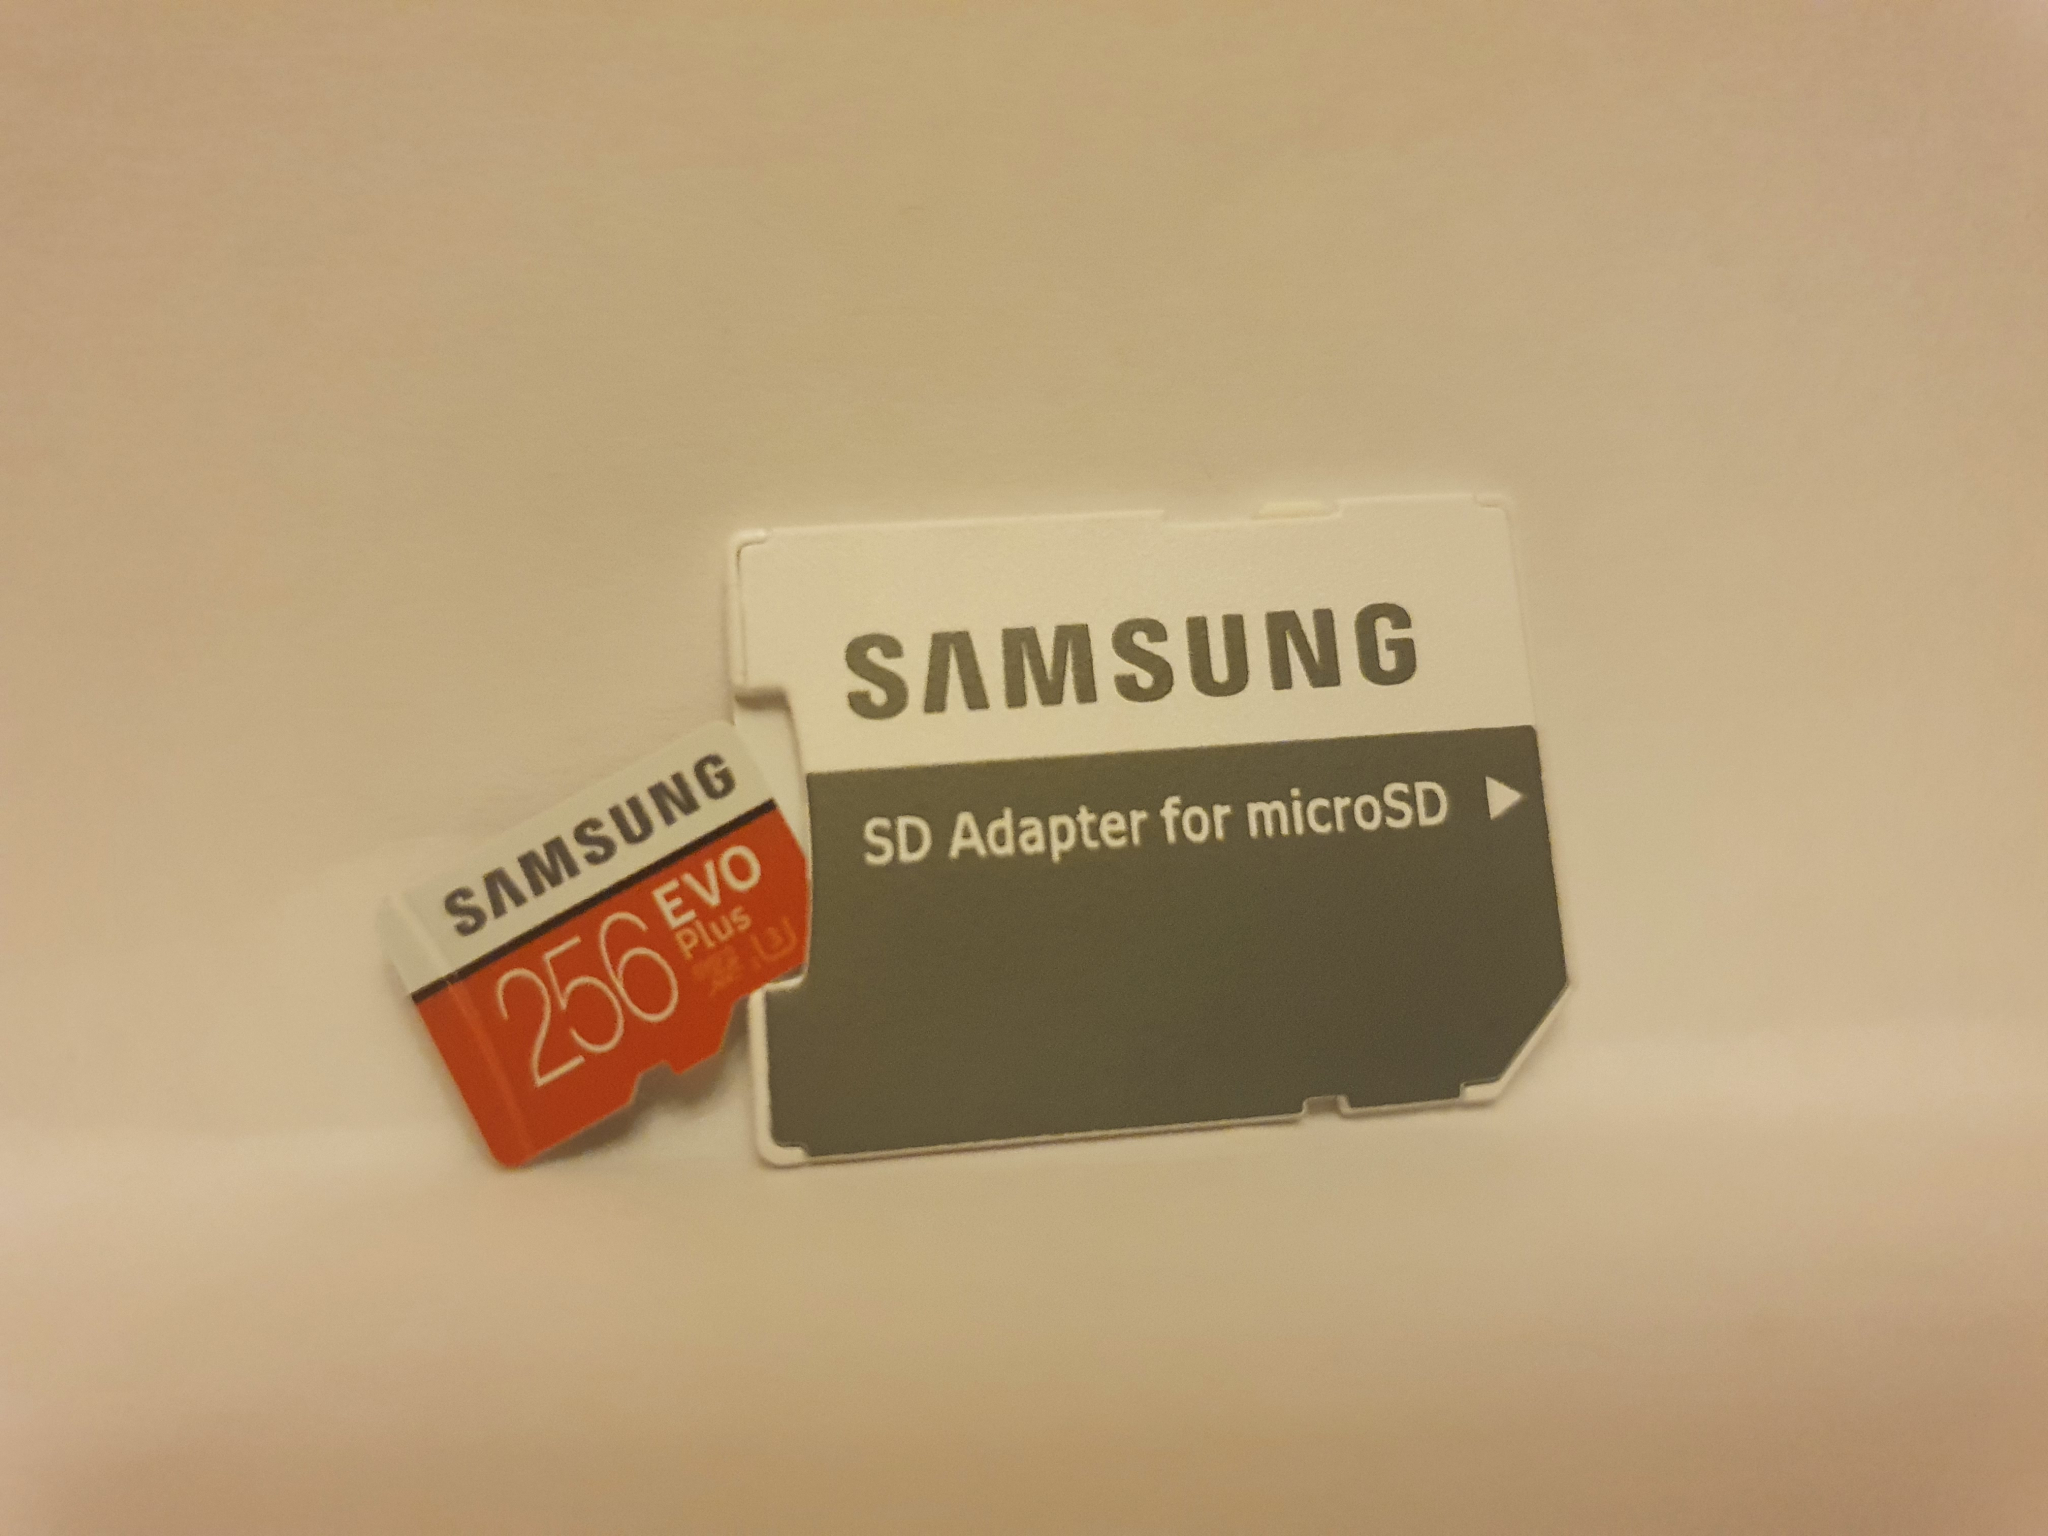 Samsung Evo Plus 512gb Ssd